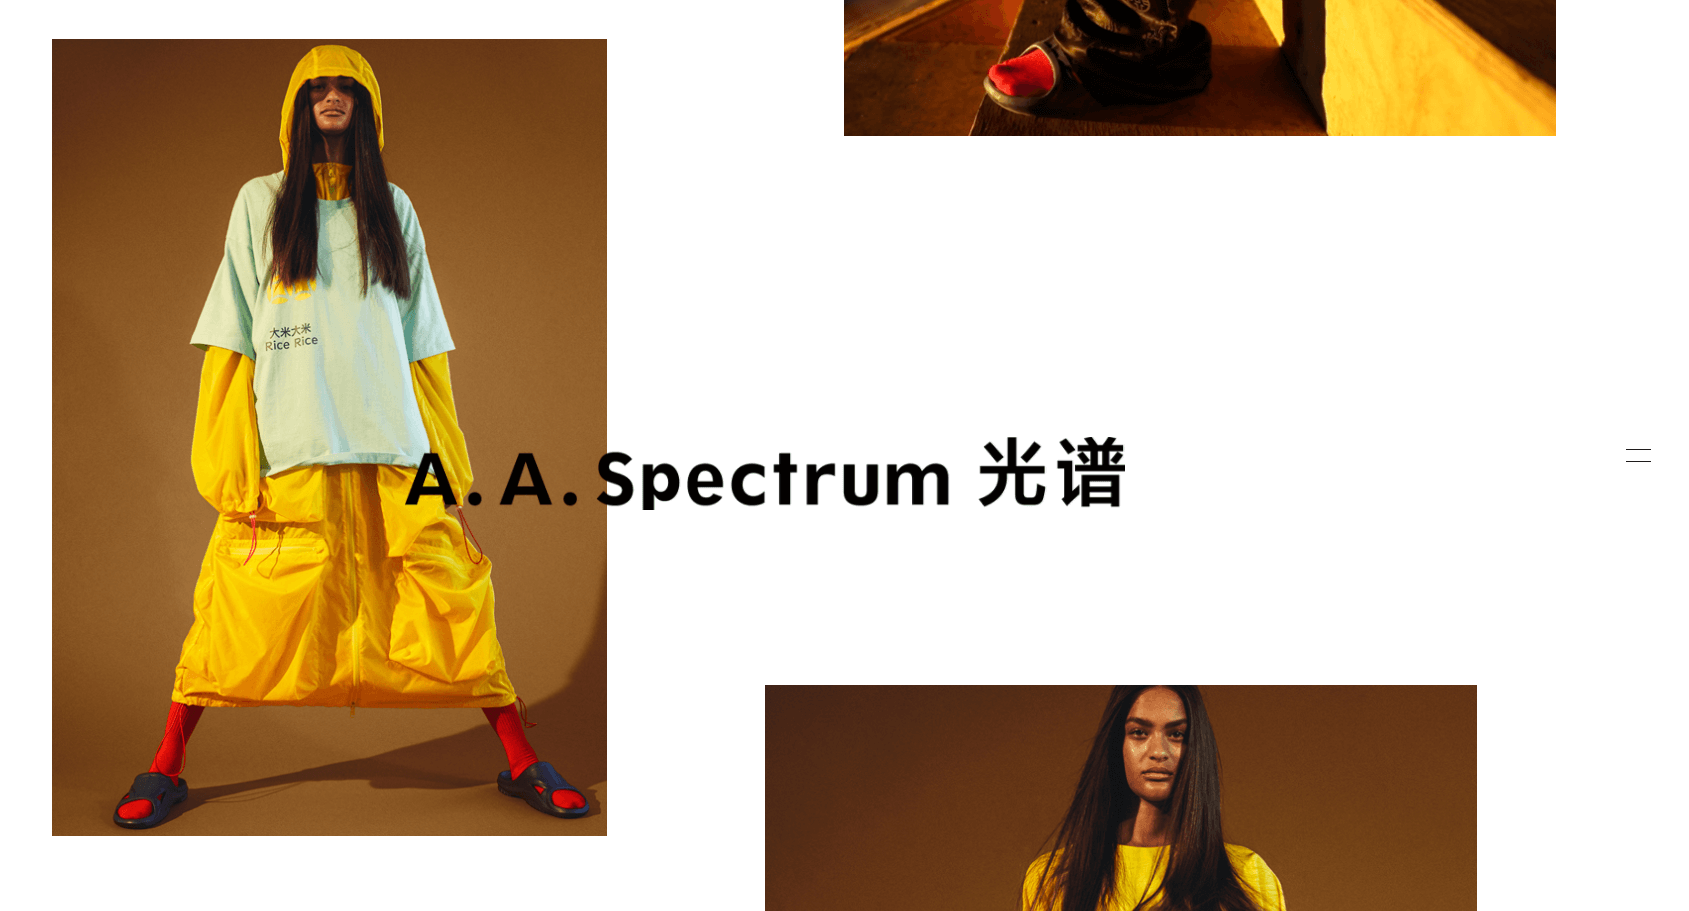 A.A. Spectrum官网-A.A.Spectrum光谱跨文化合作服装品牌